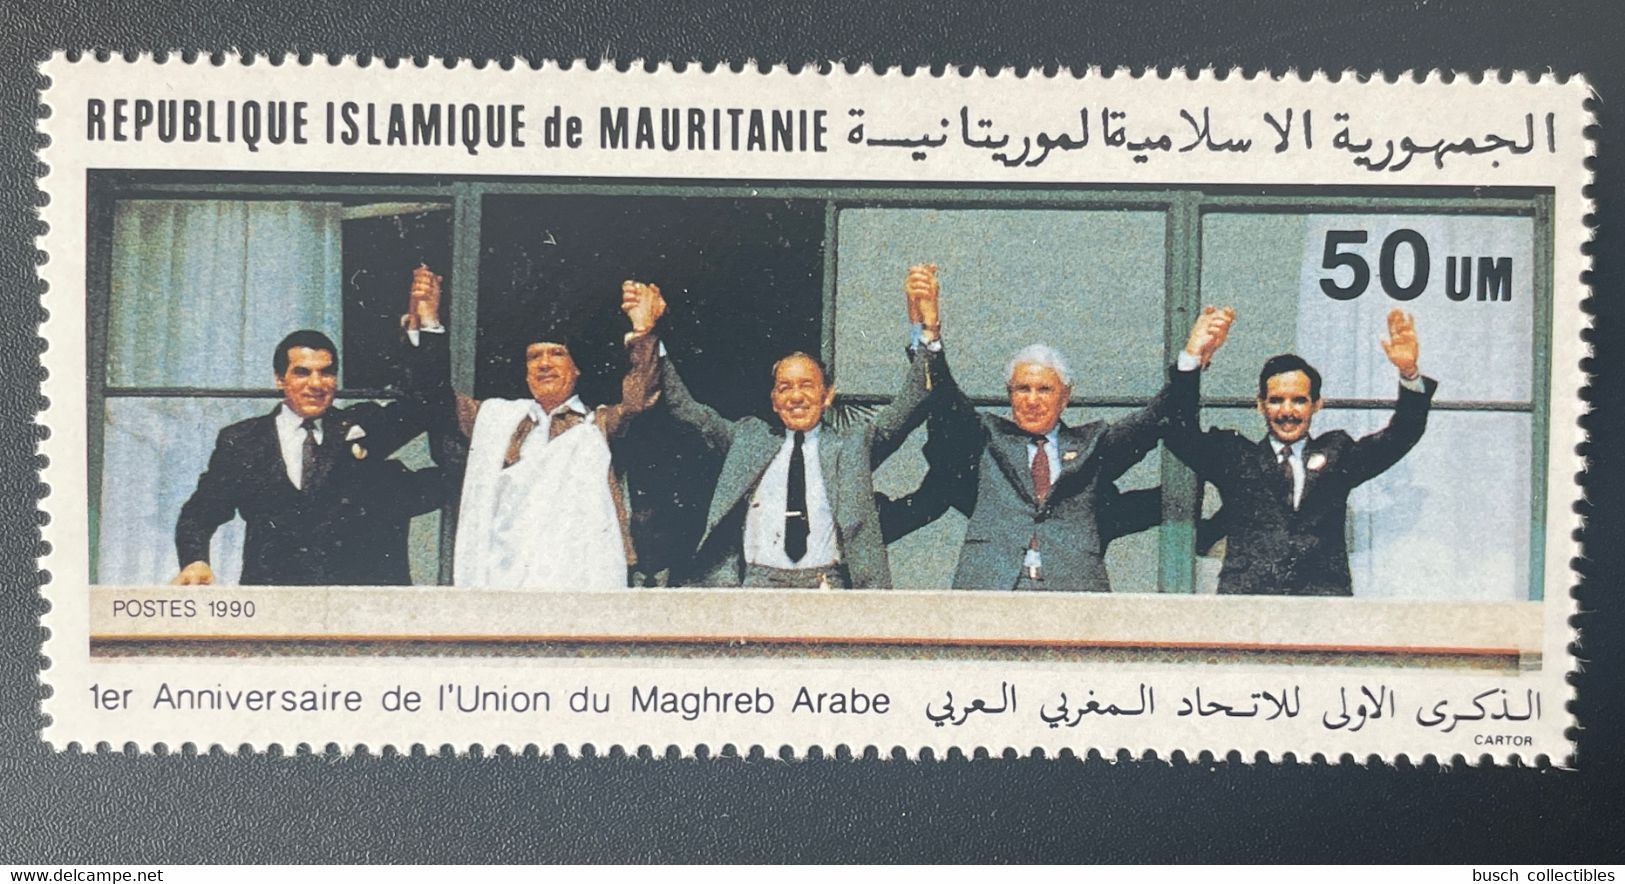 Mauritanie Mauretanien Mauritania 1990 Mi. 961 Union Maghreb Arabe Arab Gaddafi MNH ** - Mauritania (1960-...)